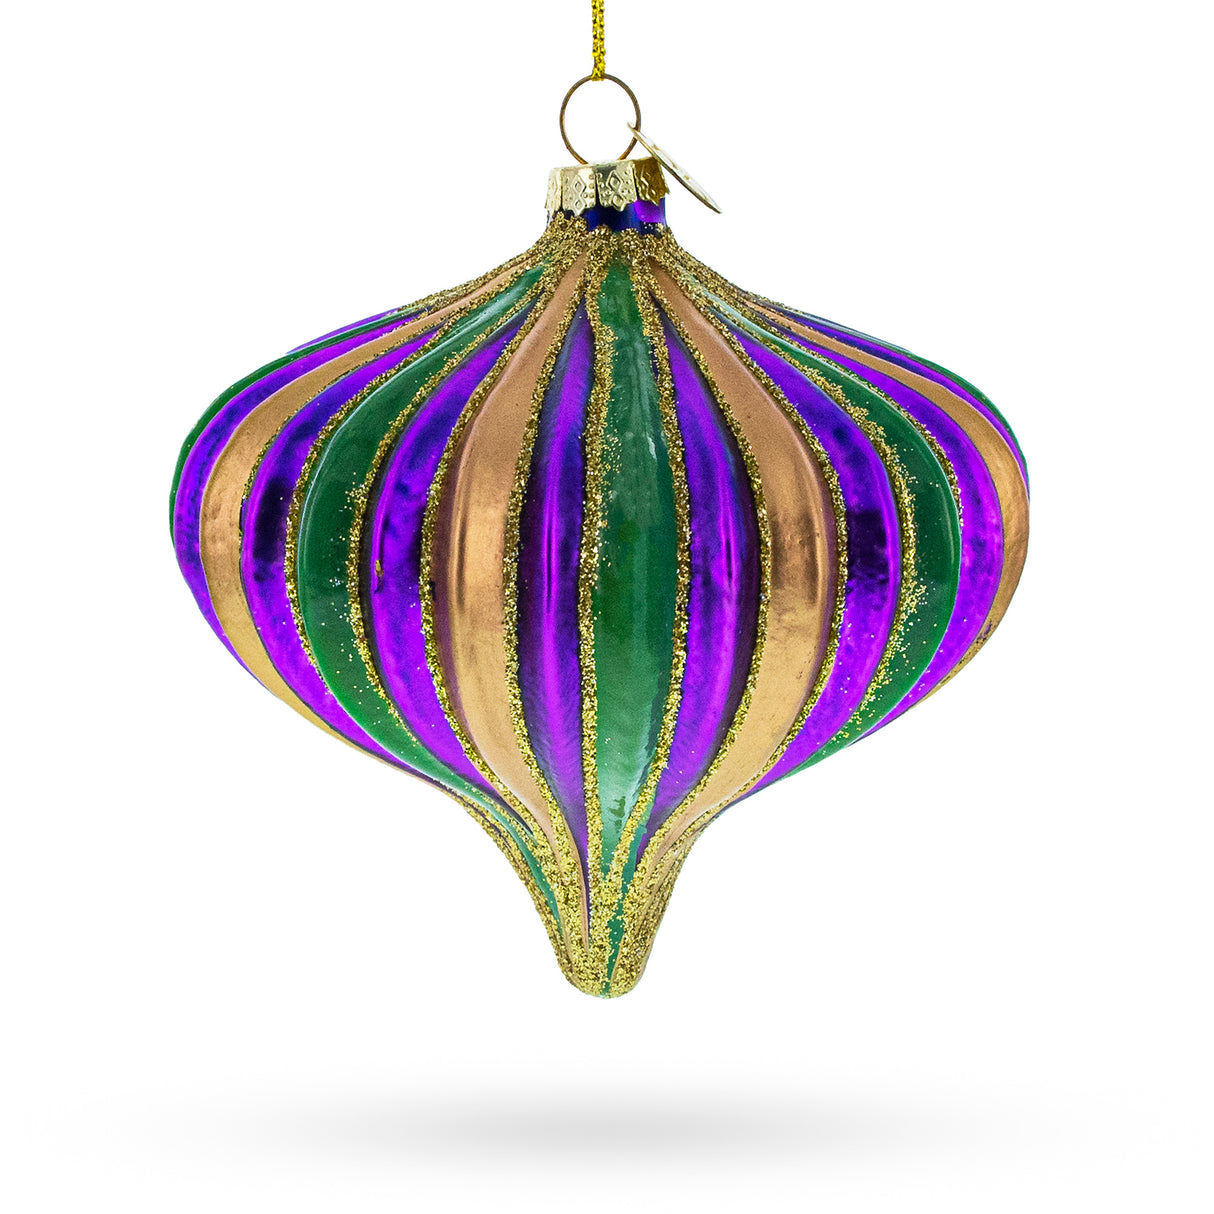 Glass Vibrant Multicolored Onion Finial Blown Glass Christmas Ornament in Purple color Oval